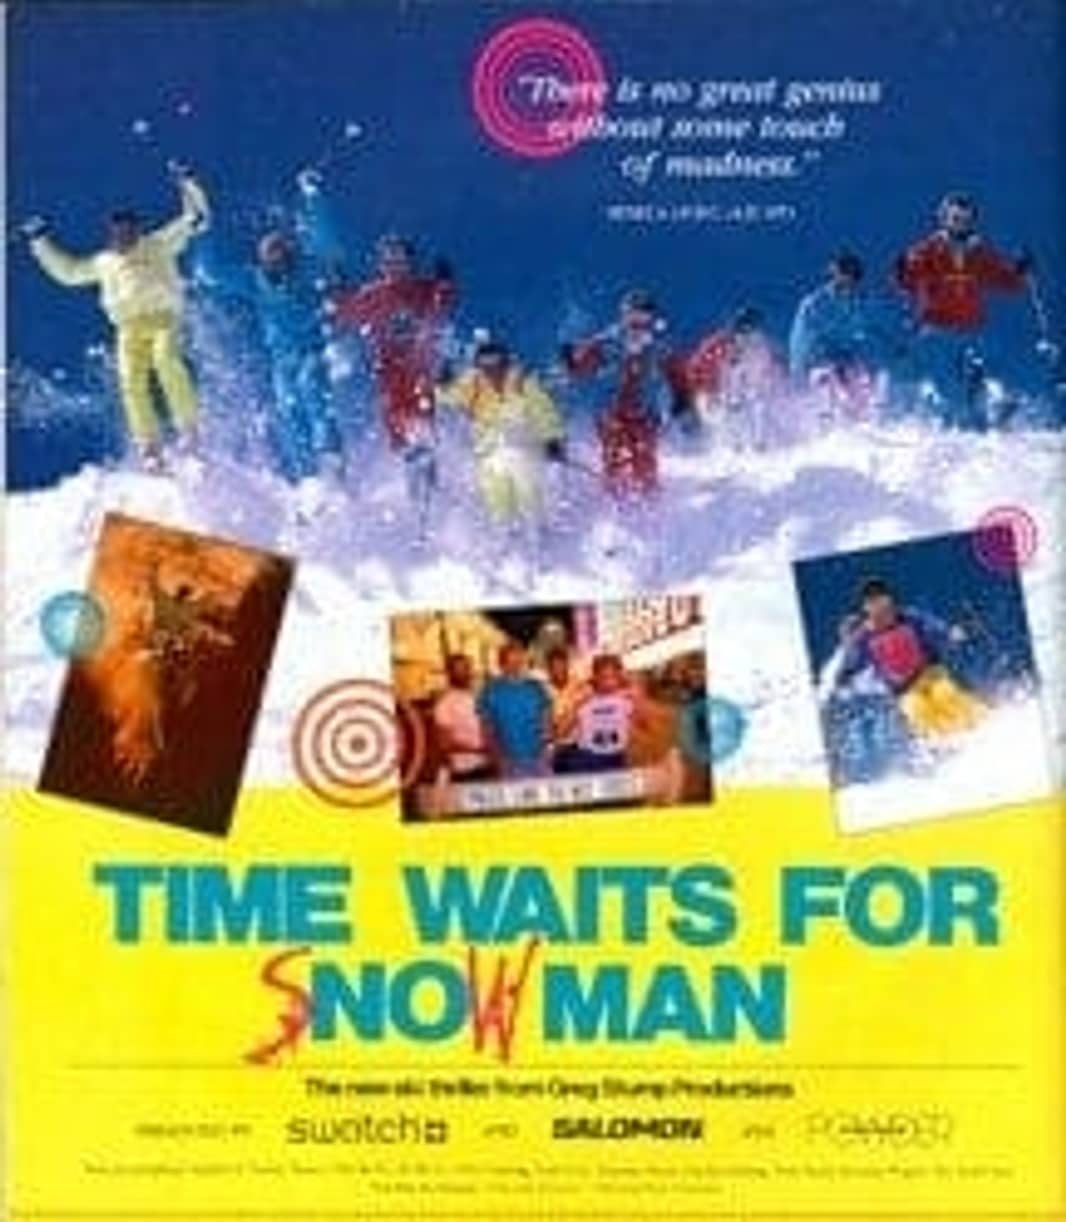 Time Waits For Snowman (DVD) – Greg Stumps, Blizzard Snow Store